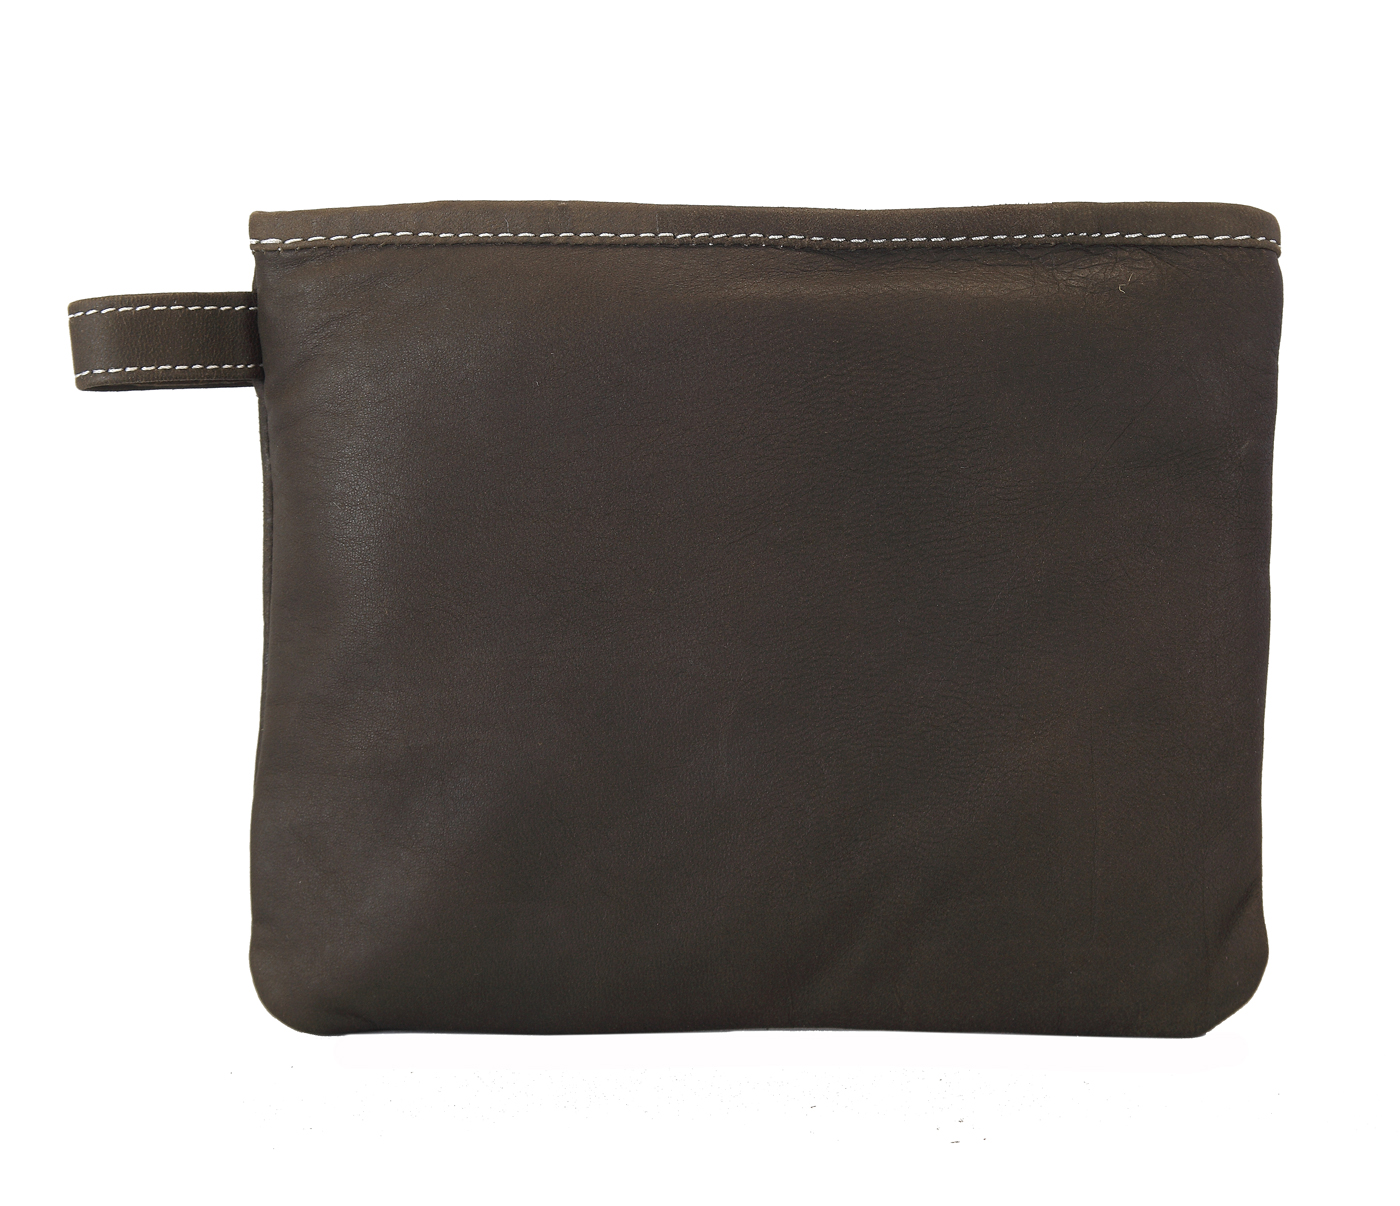 W227--Unisex multi purpose pouch in Genuine Leather - Brown.